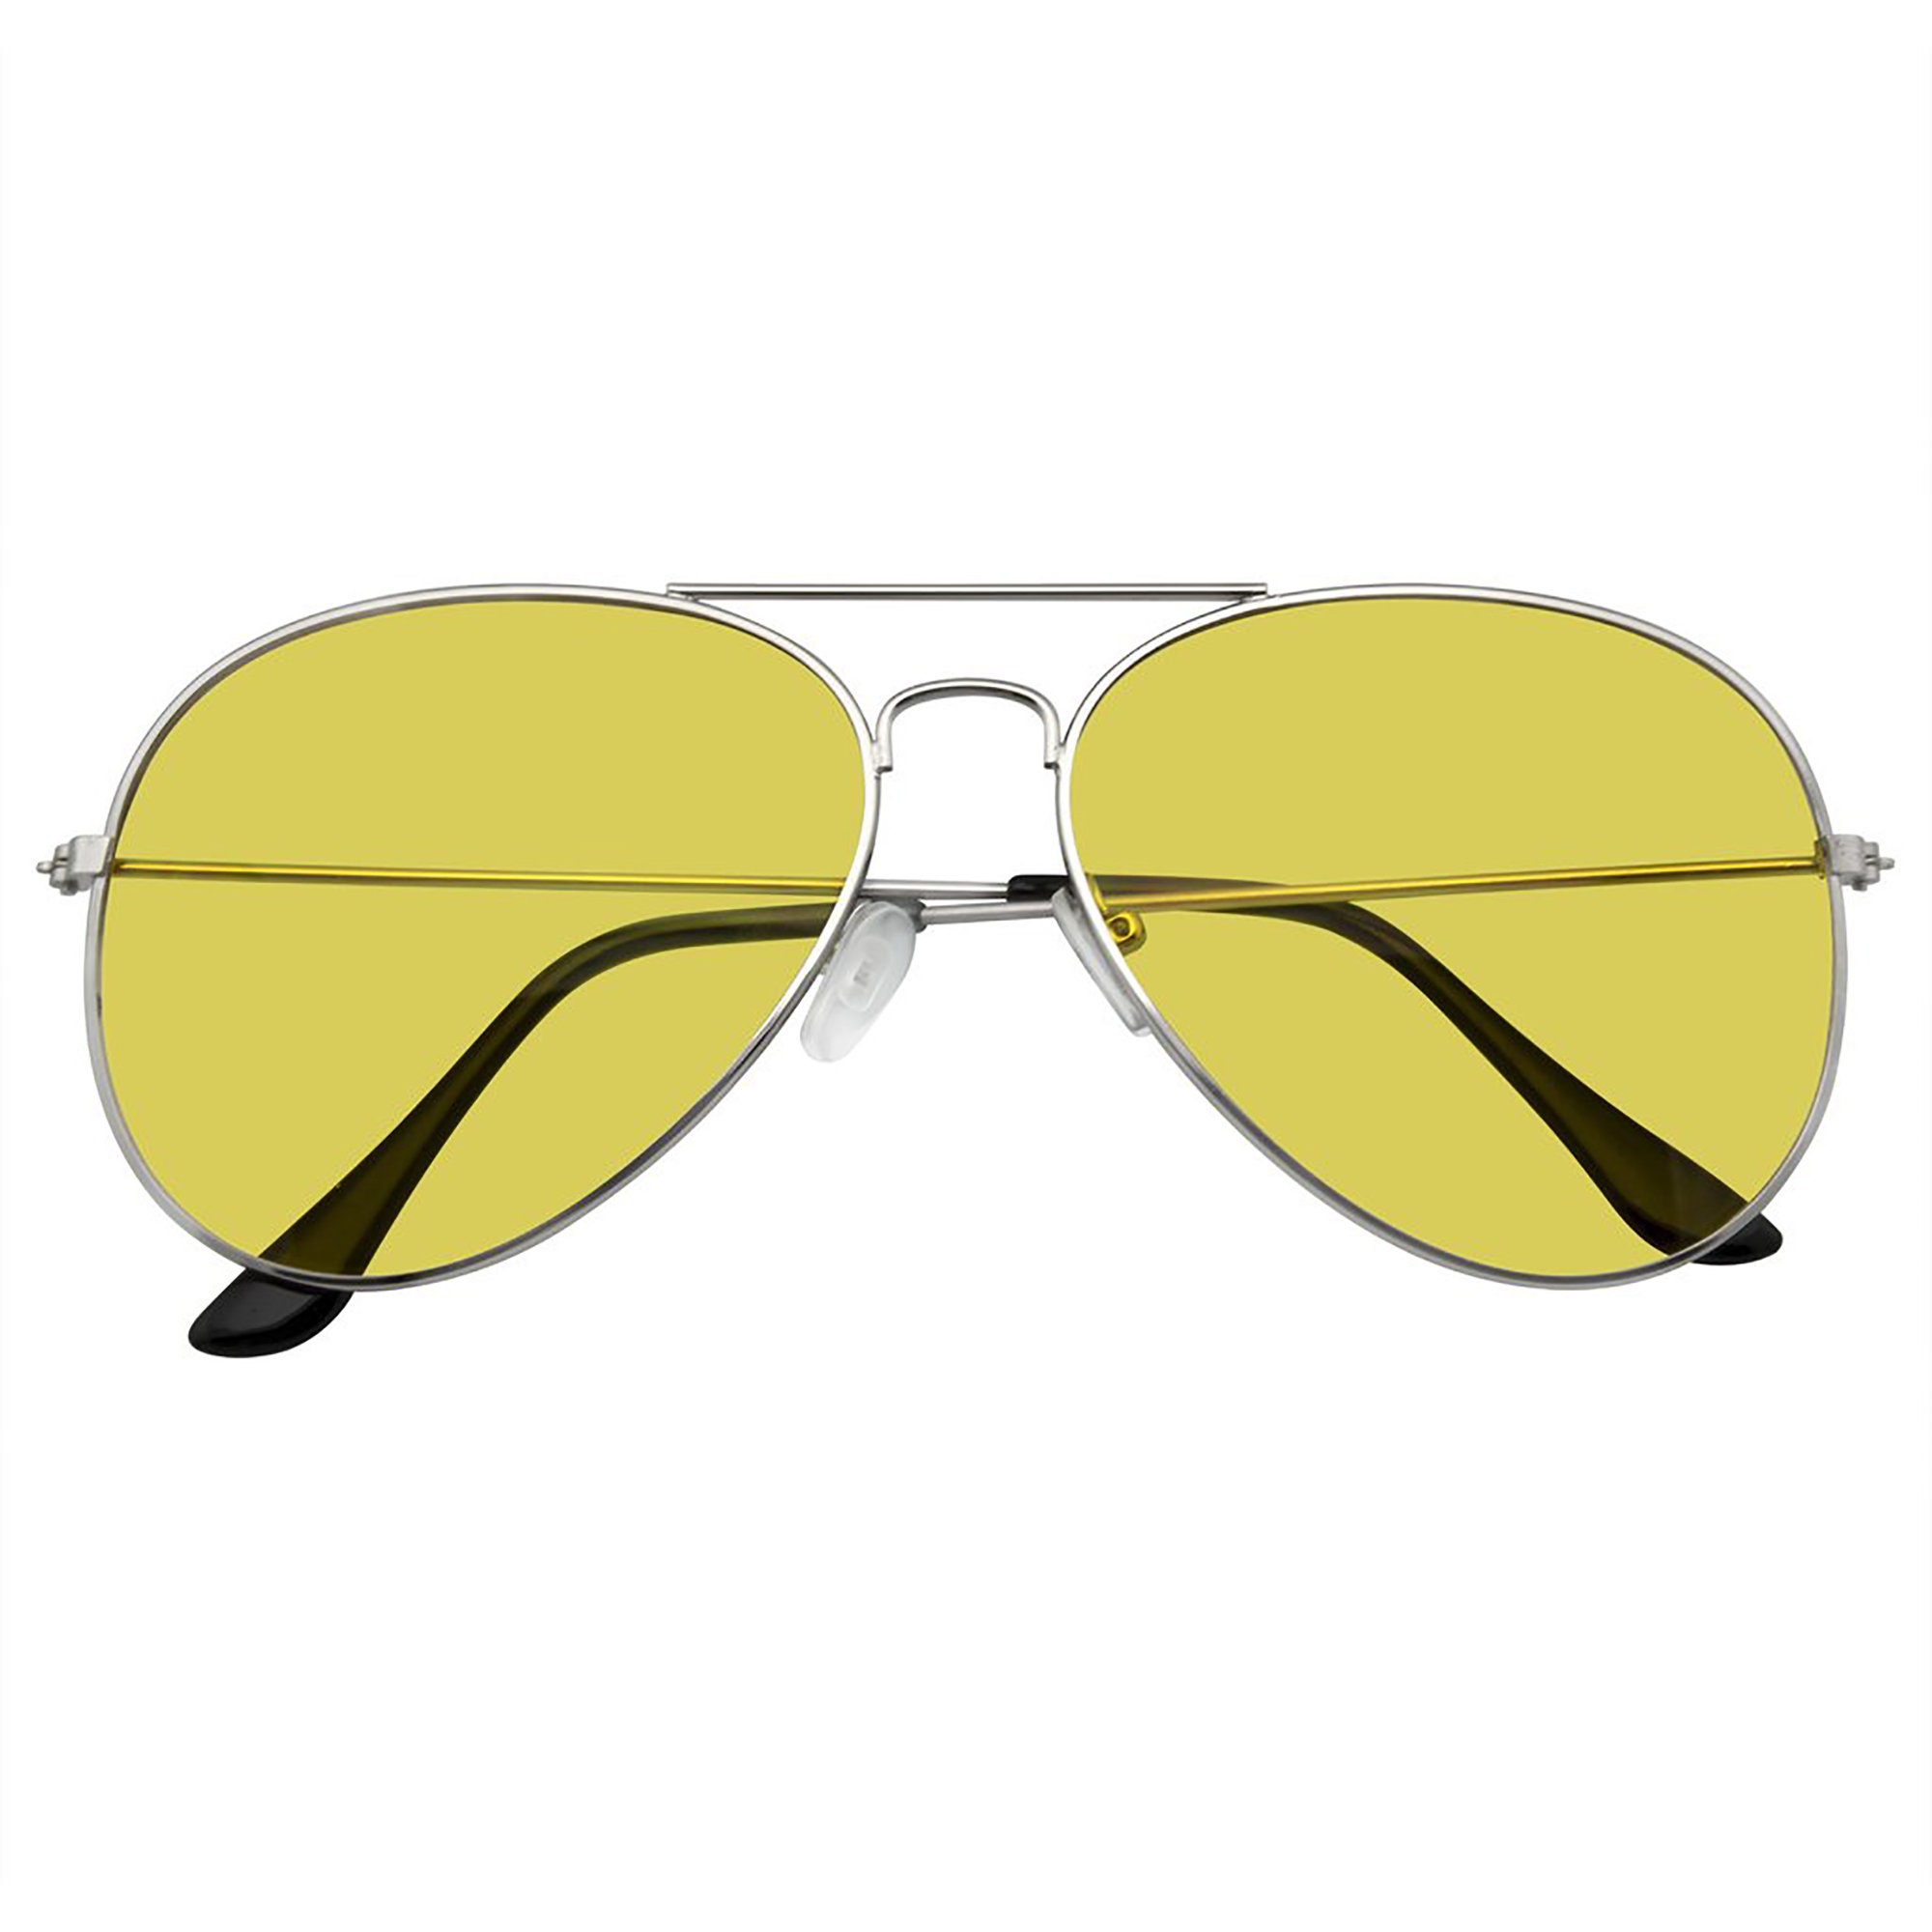 Emblem Eyewear Sunglasses Mens Womens Color Tinted Lens - Etsy